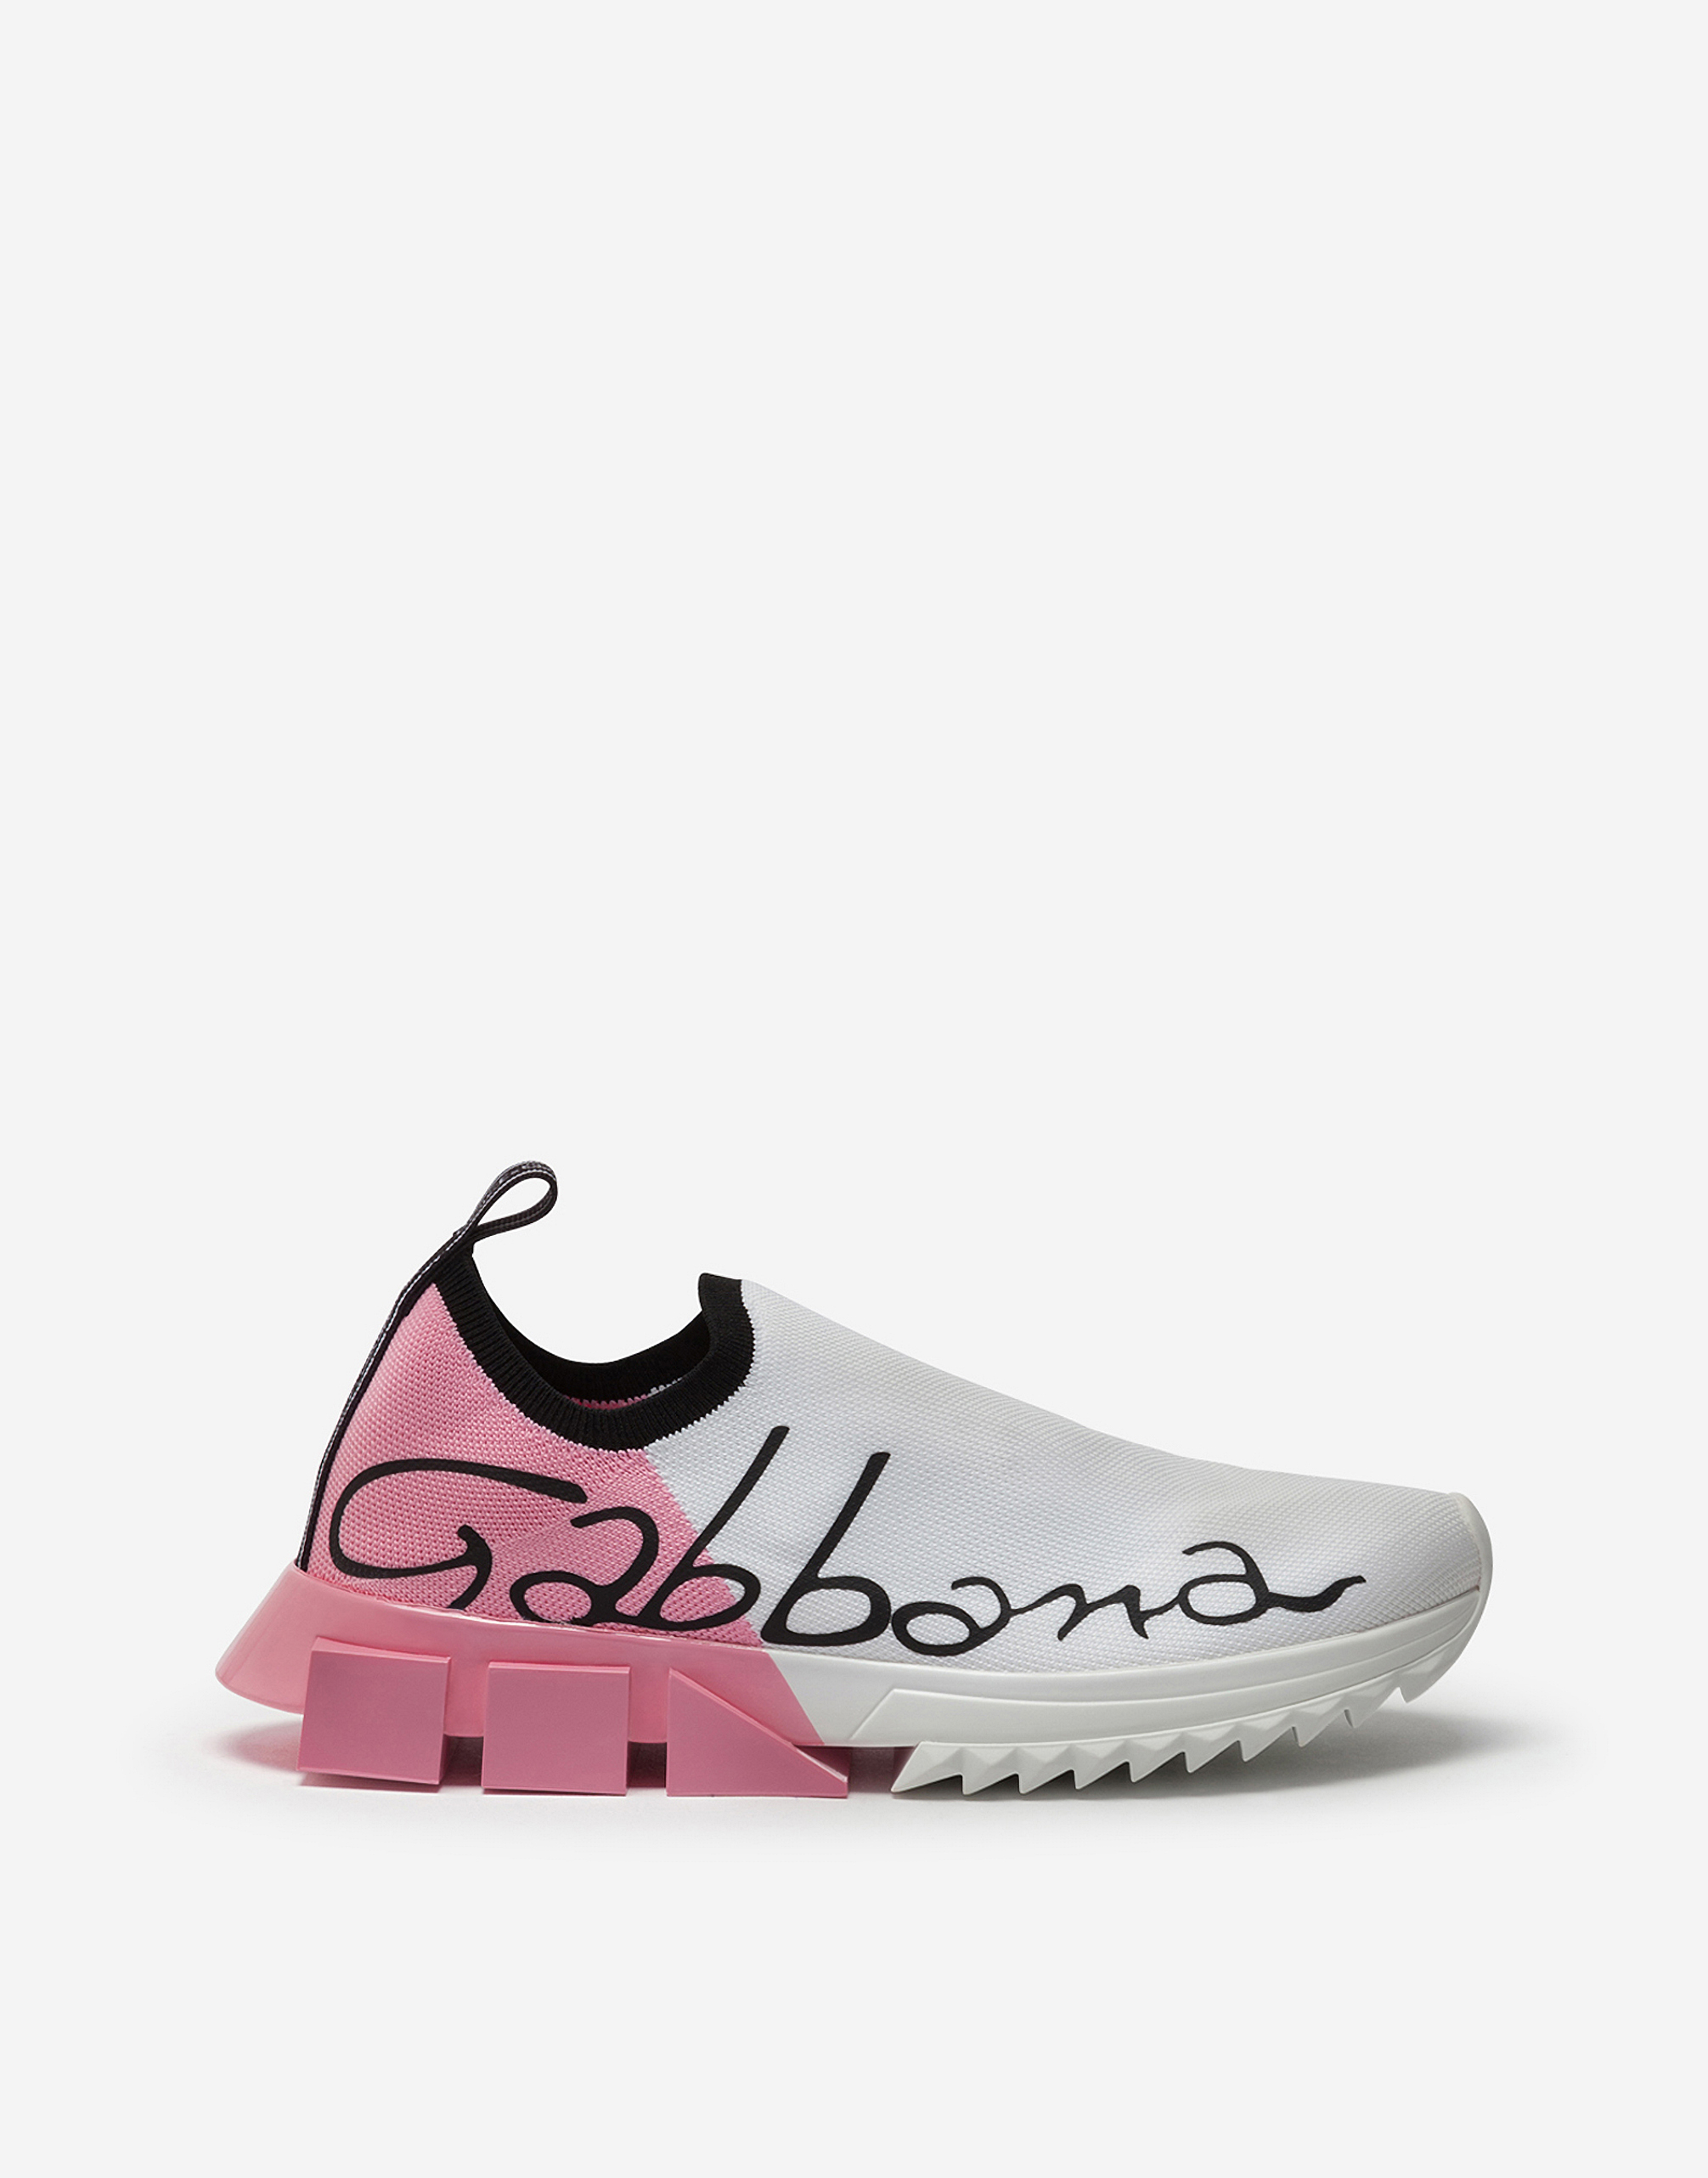 dolce gabbana pink shoes